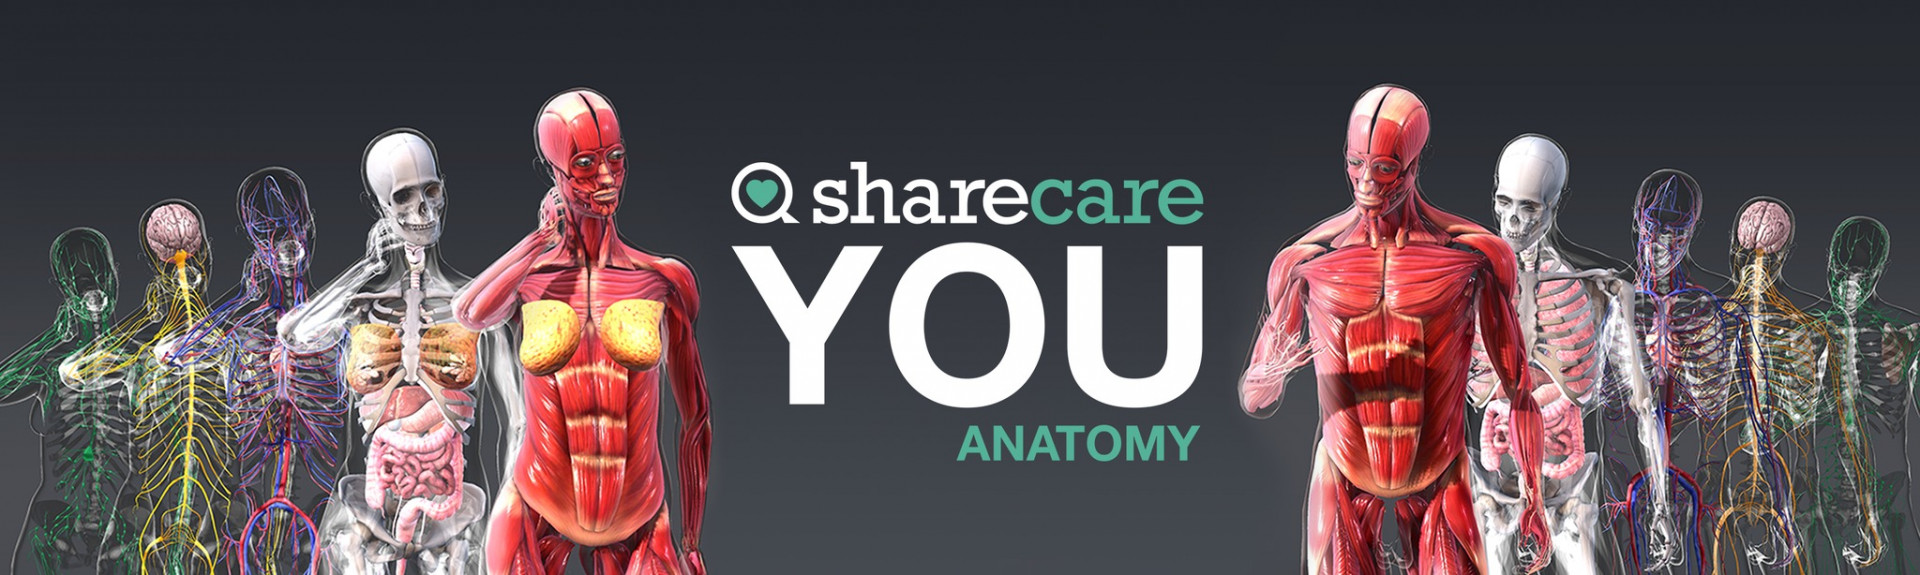 Sharecare YOU Anatomy